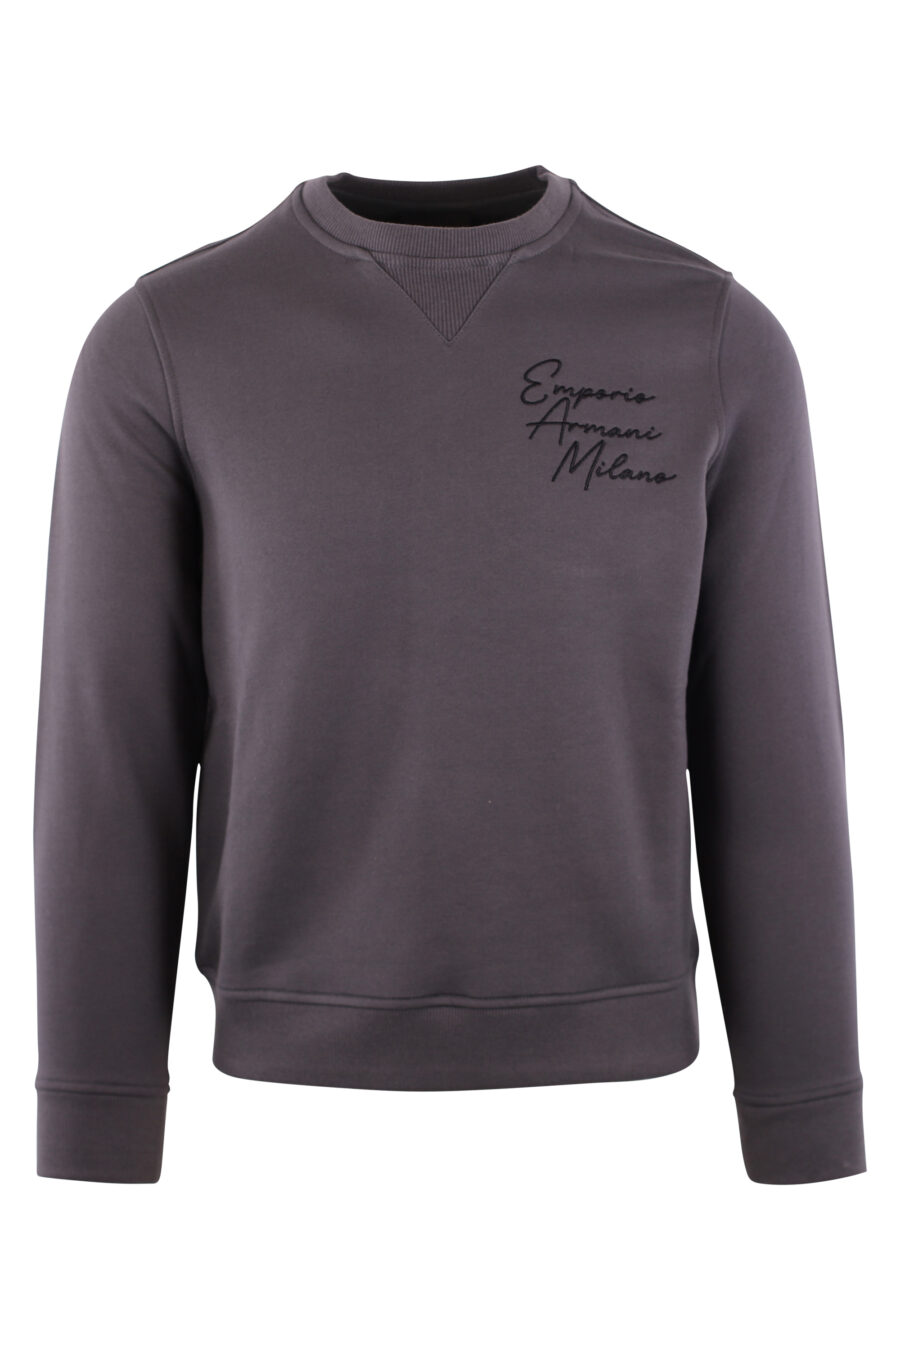 Sweatshirt cinzenta com logótipo caligráfico preto - IMG 3149